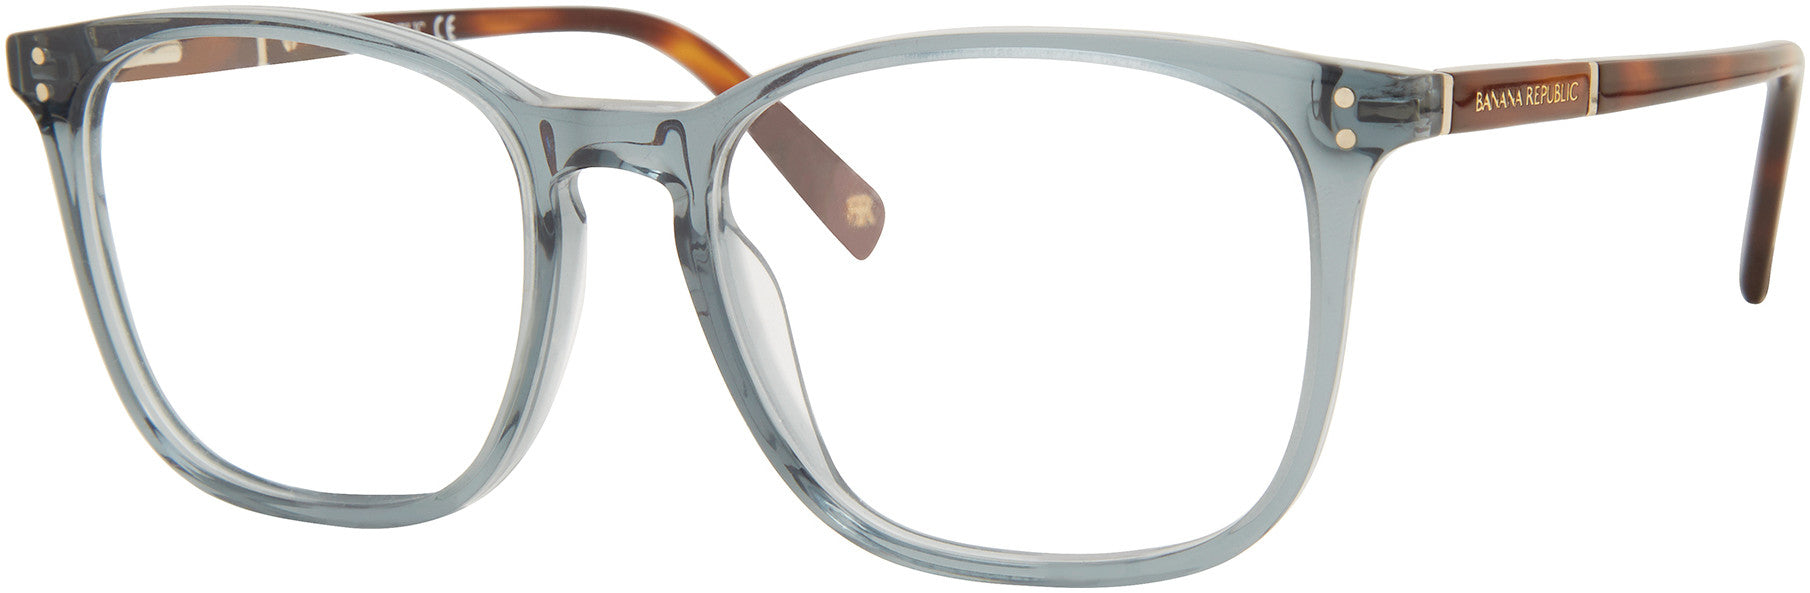 Banana Republic Luna Square Eyeglasses 0E1N-0E1N  Aquapequiaqu Crystal (00 Demo Lens)